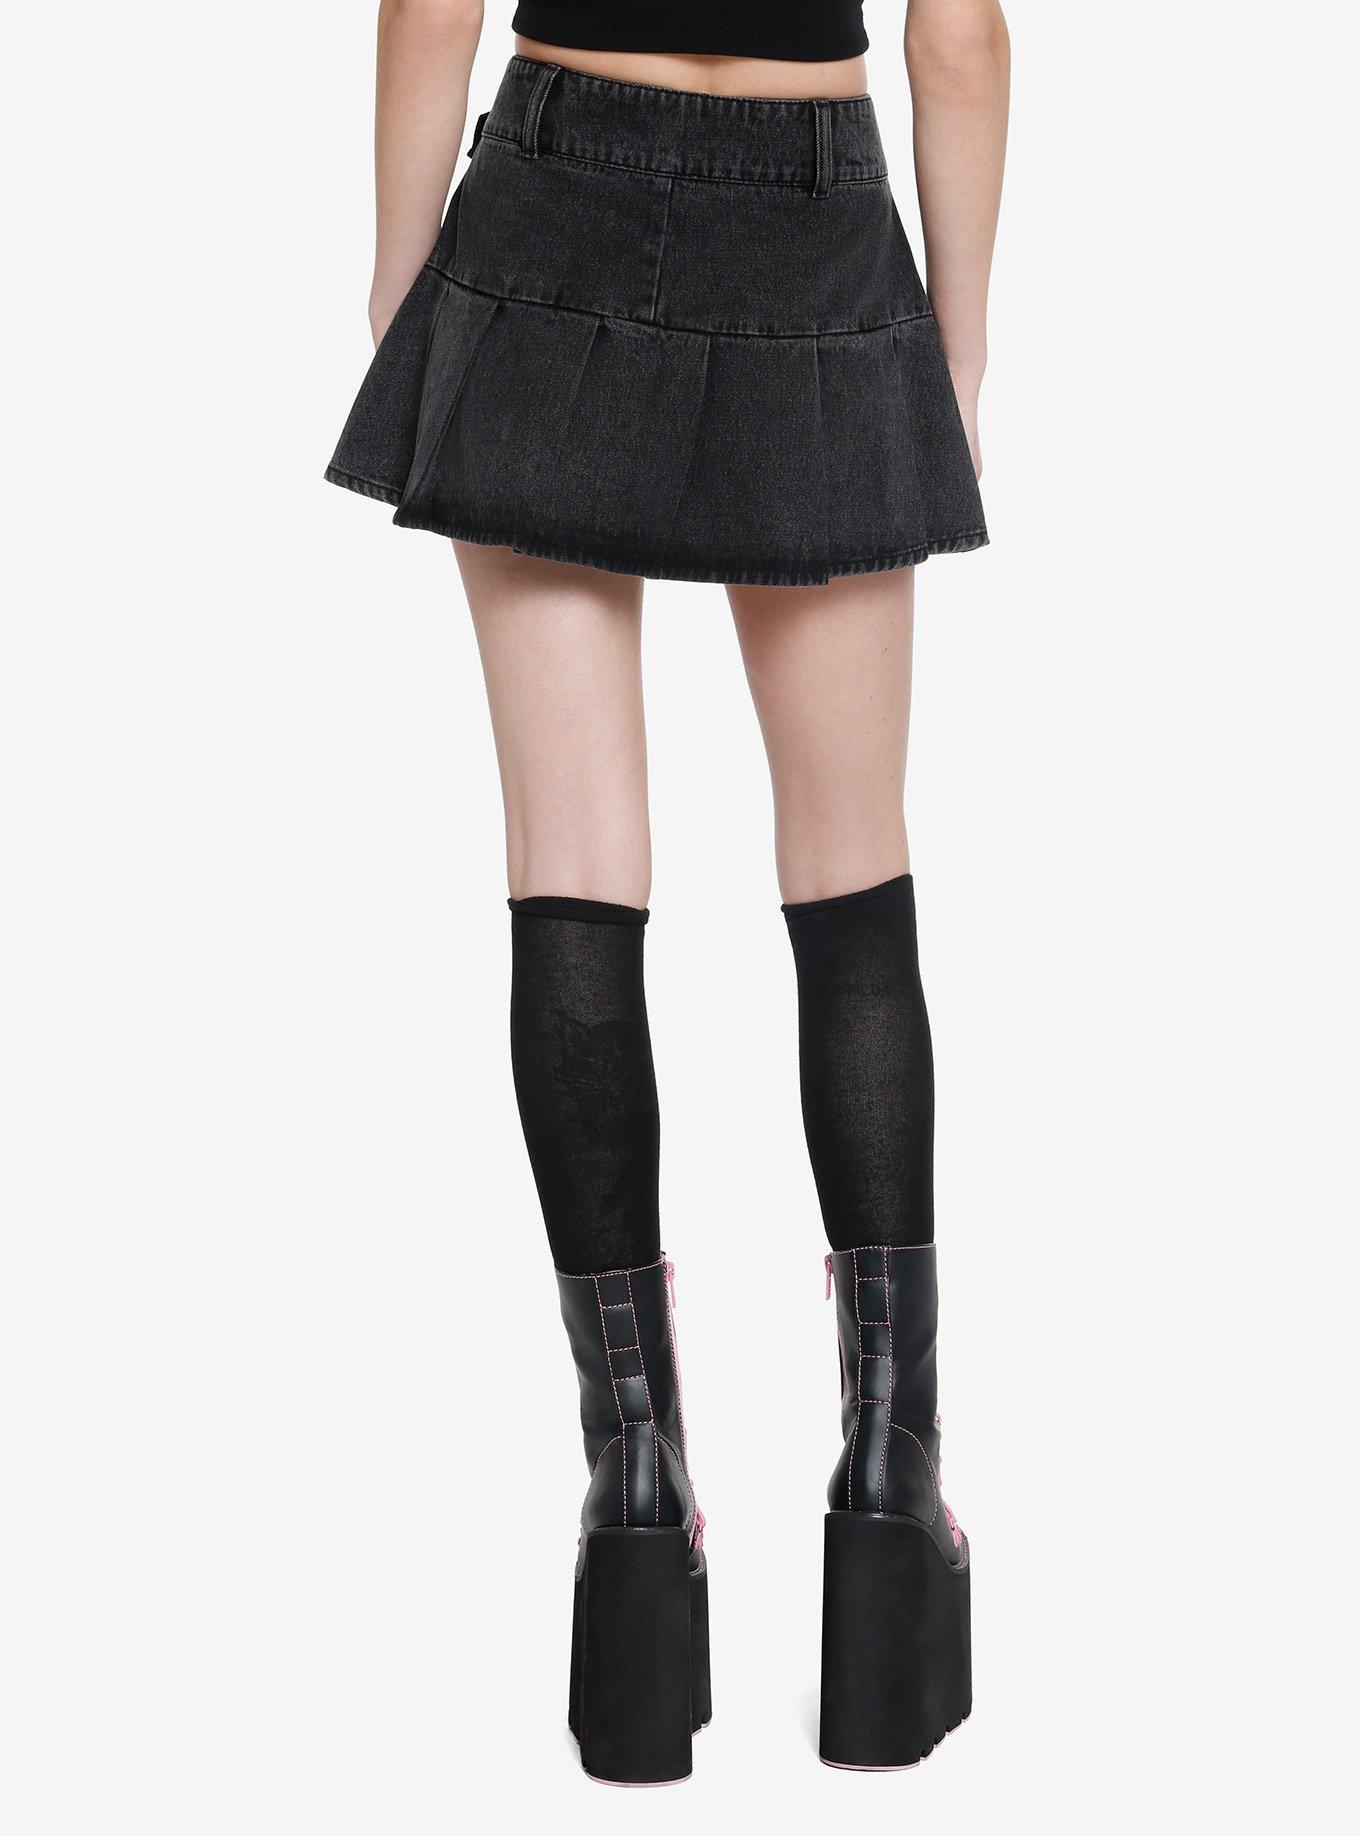 Social Collision Black Lace-Up Pleated Denim Skirt, ACID BLACK, alternate